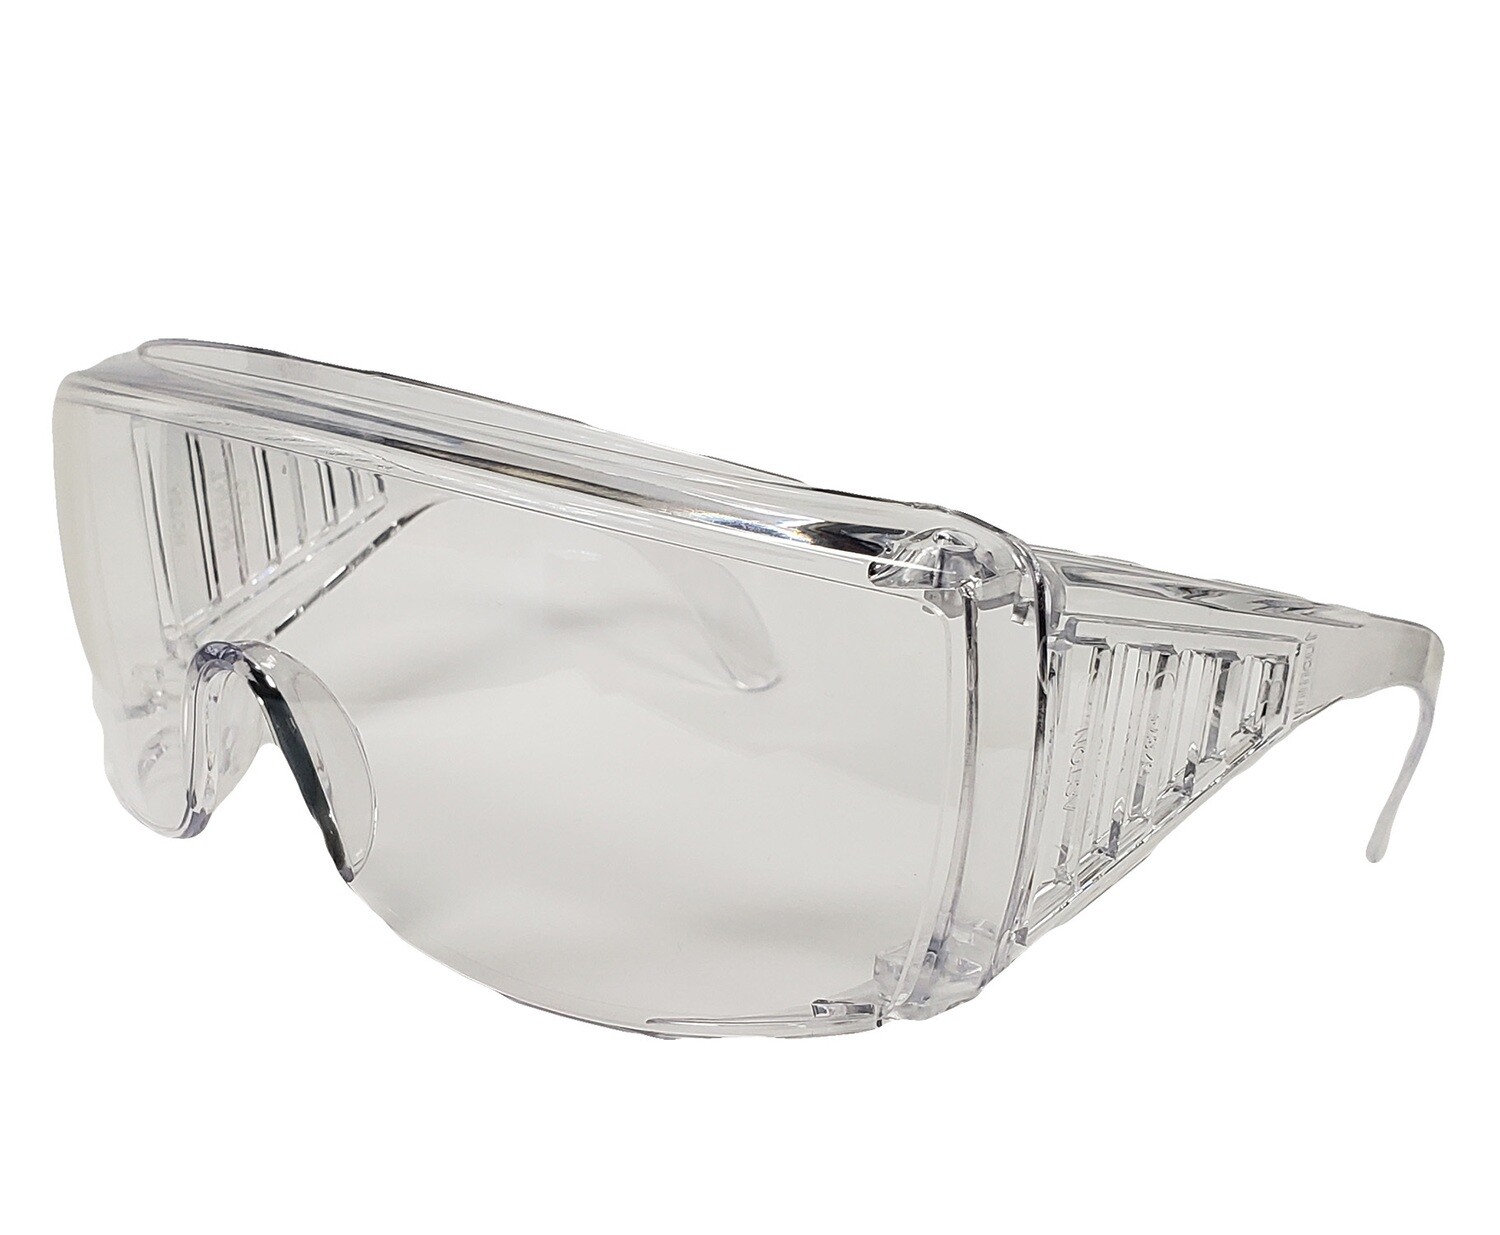 Dentec Safety Glasses - 12E258000B